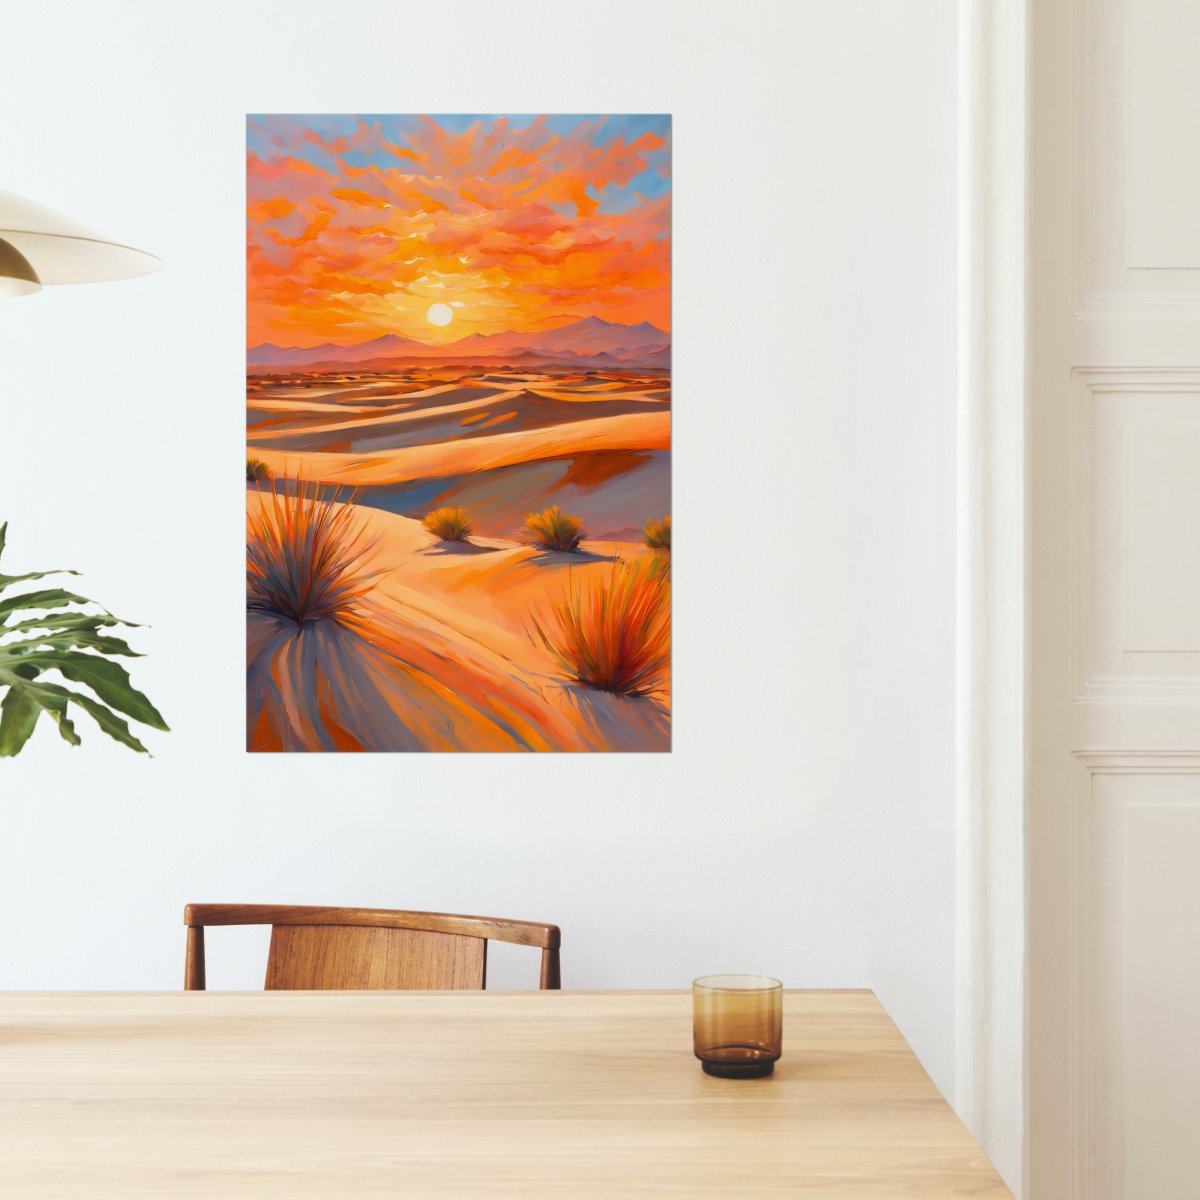 Sahara sand dunes - Art print - Poster - Ever colorful